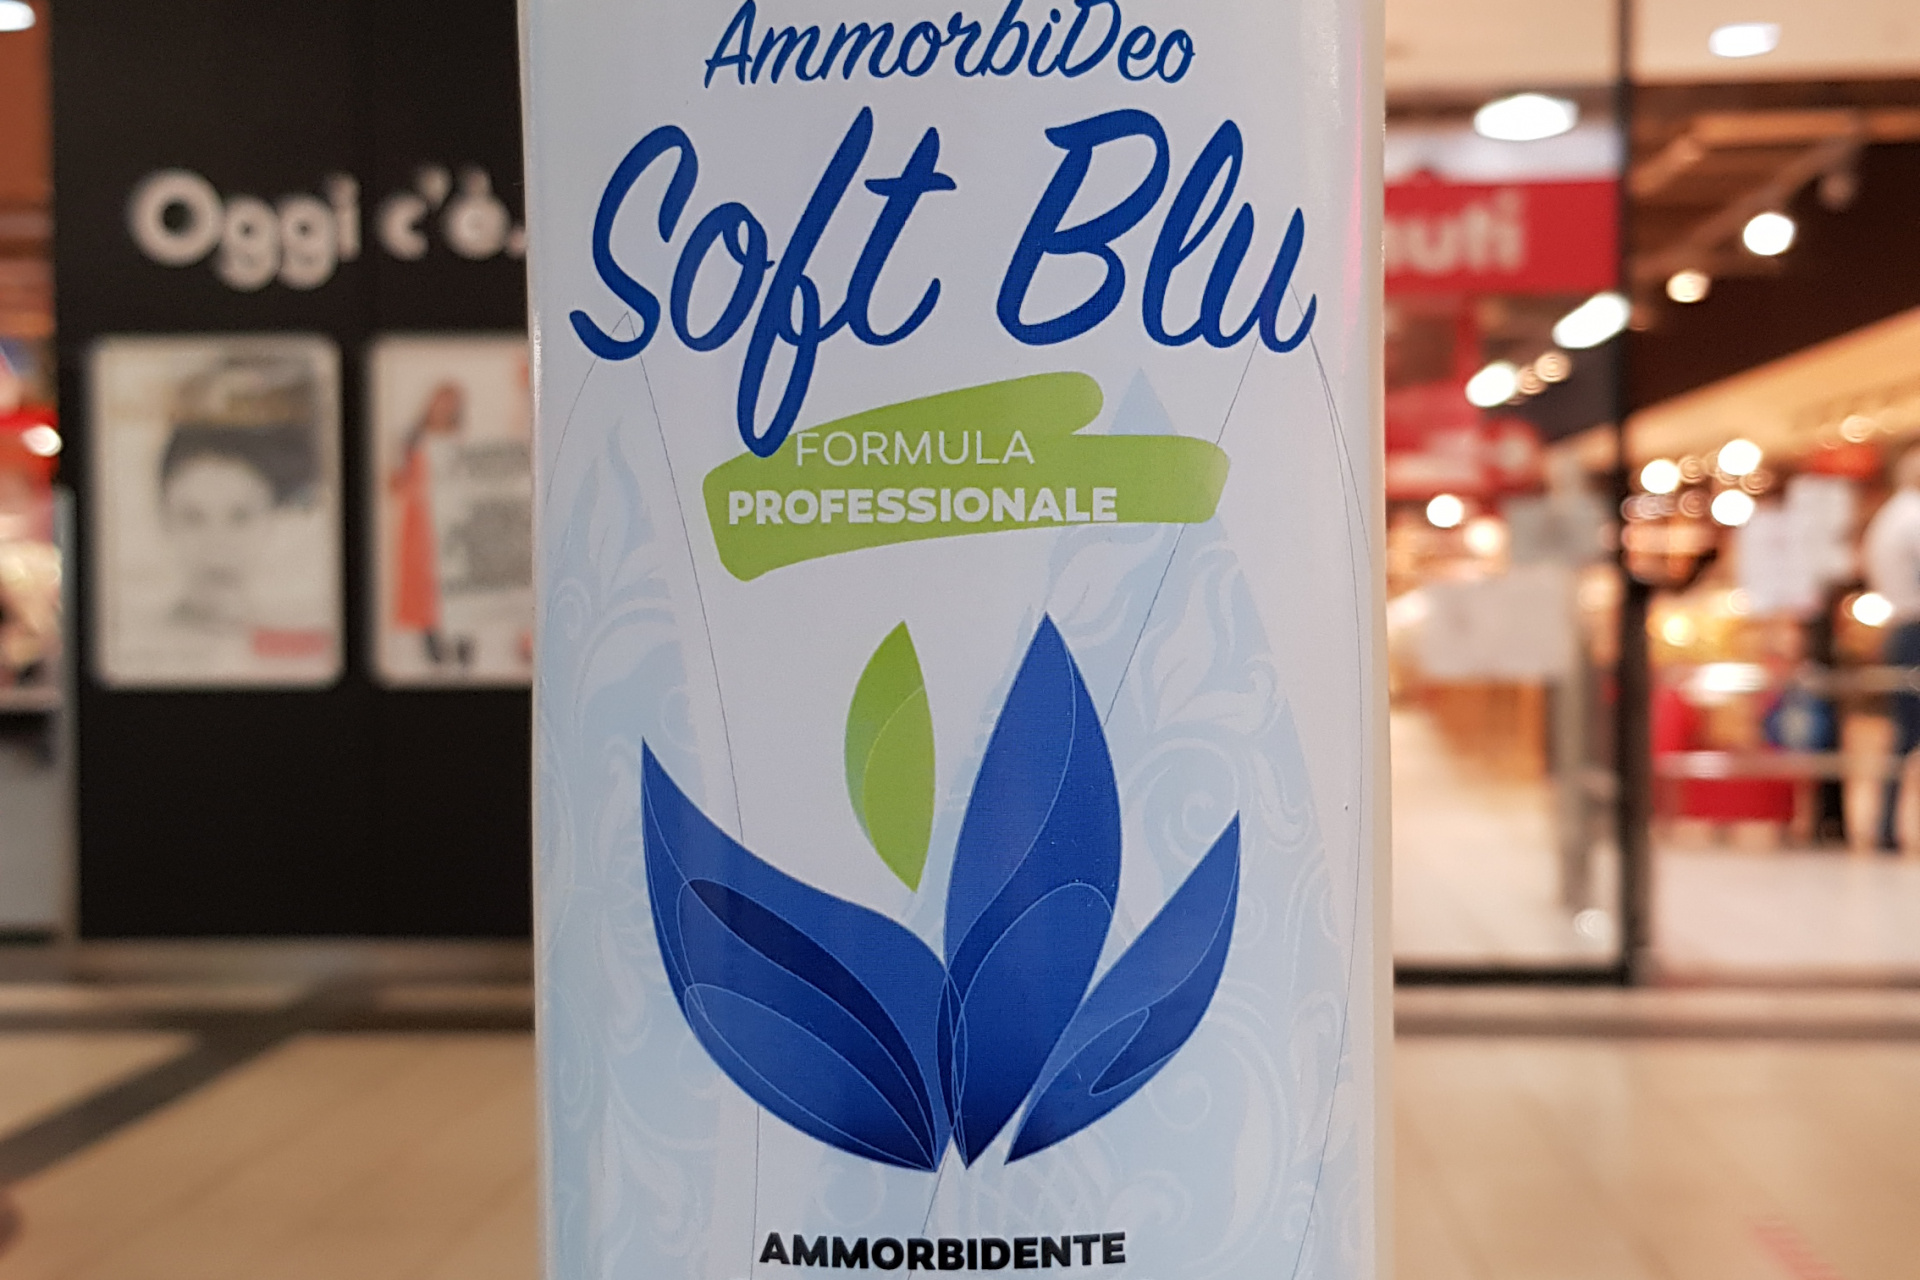 Soft Blu AmmorbiDeo